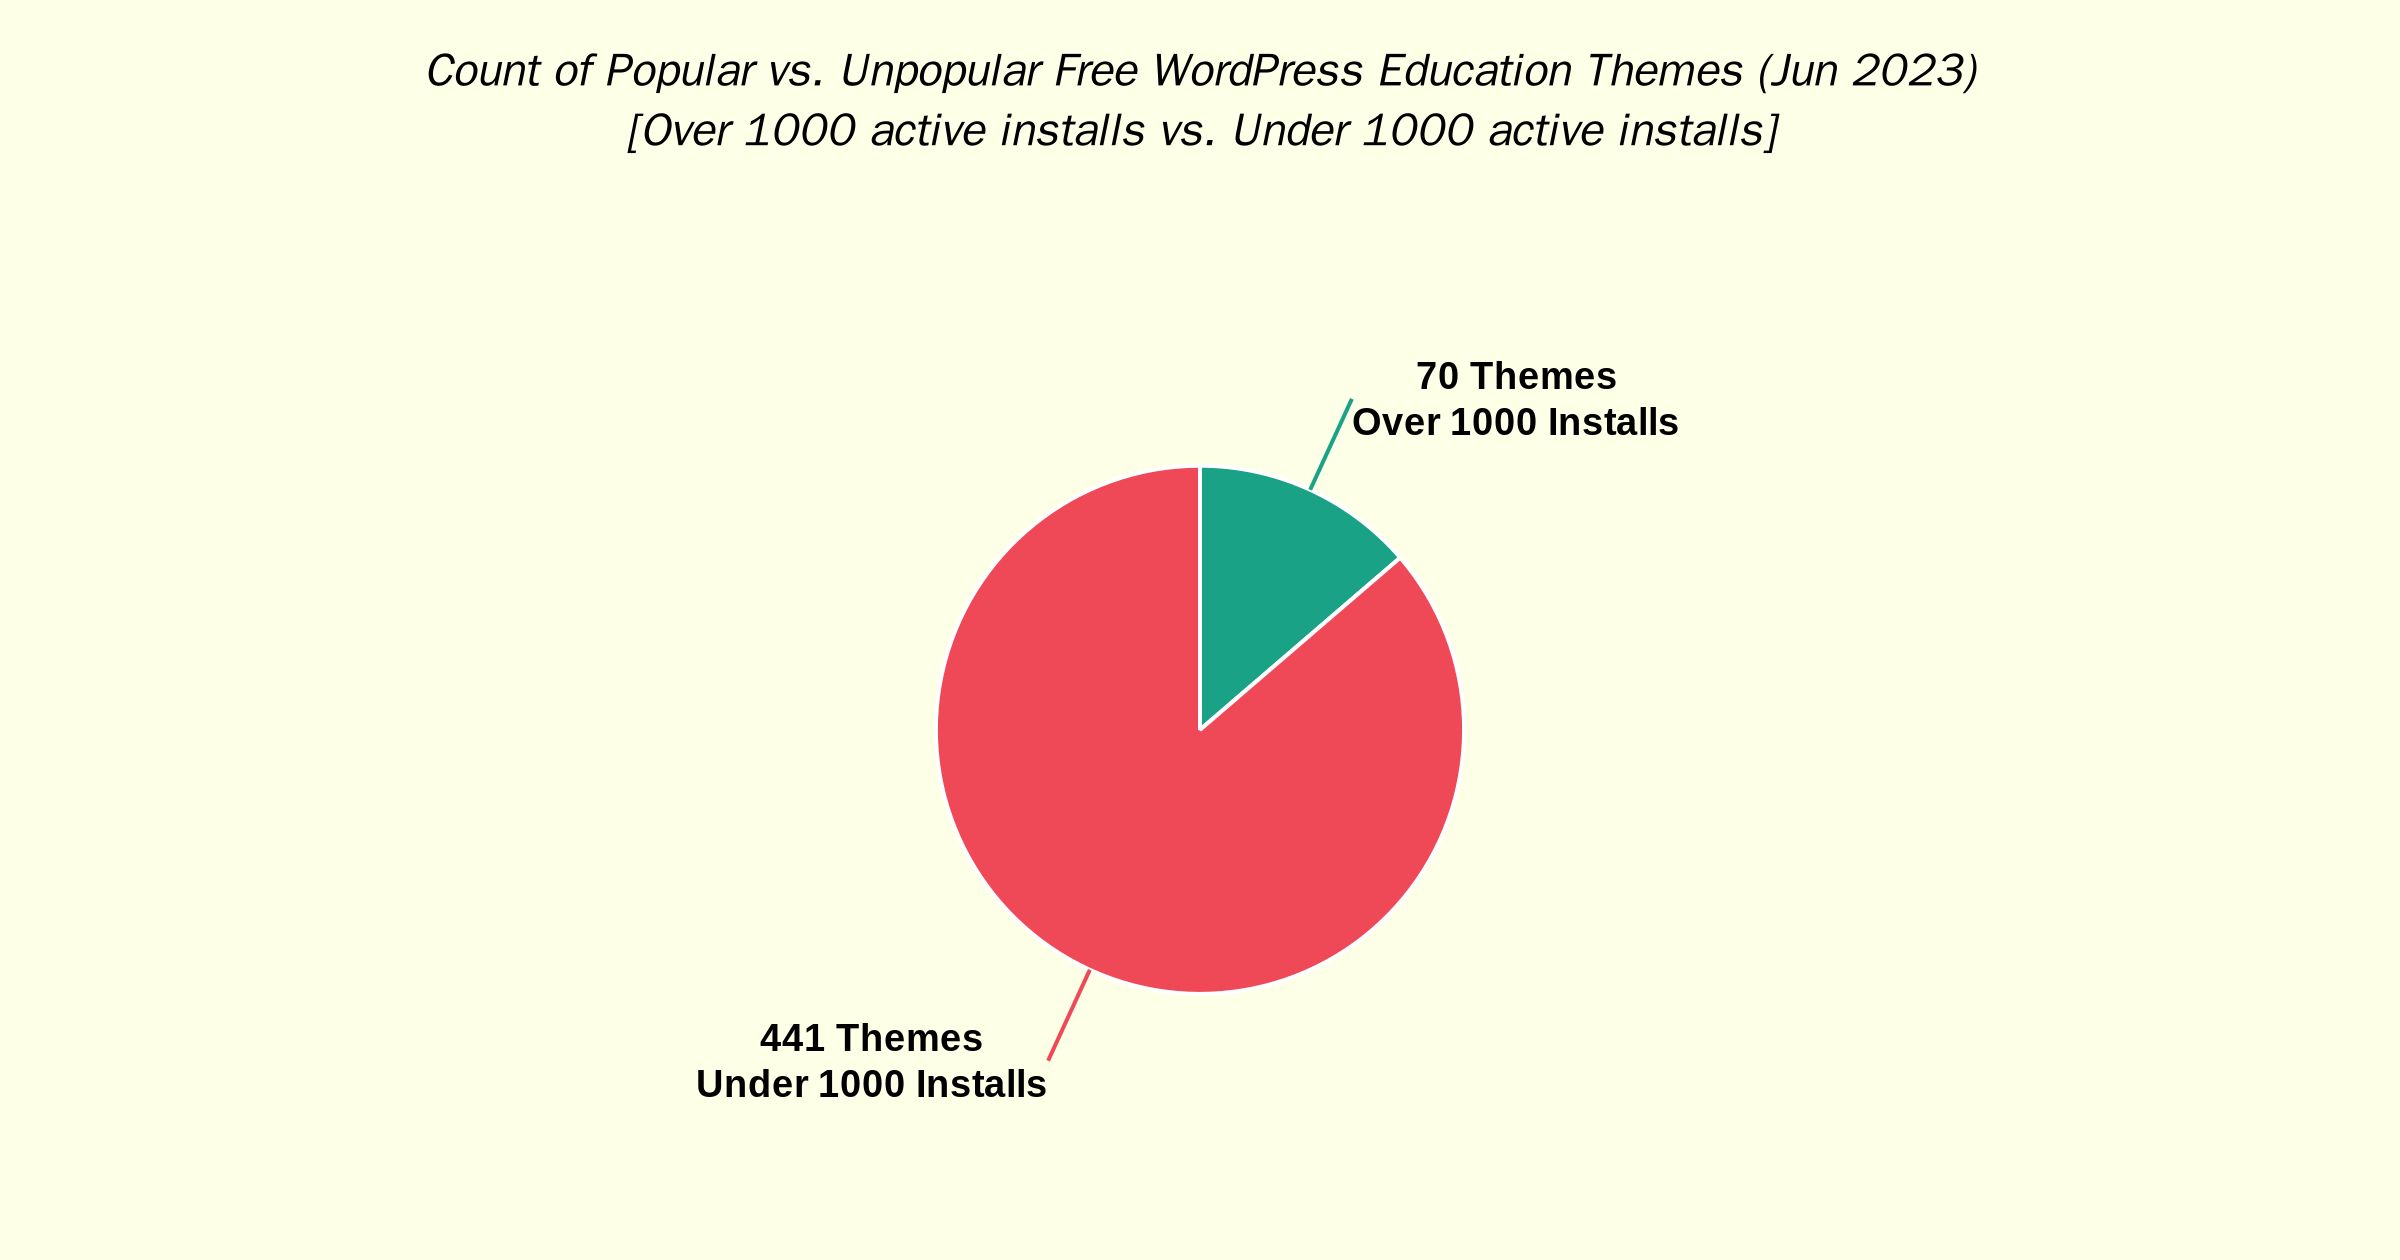 Count of popular vs. unpopular free active WordPress education themes